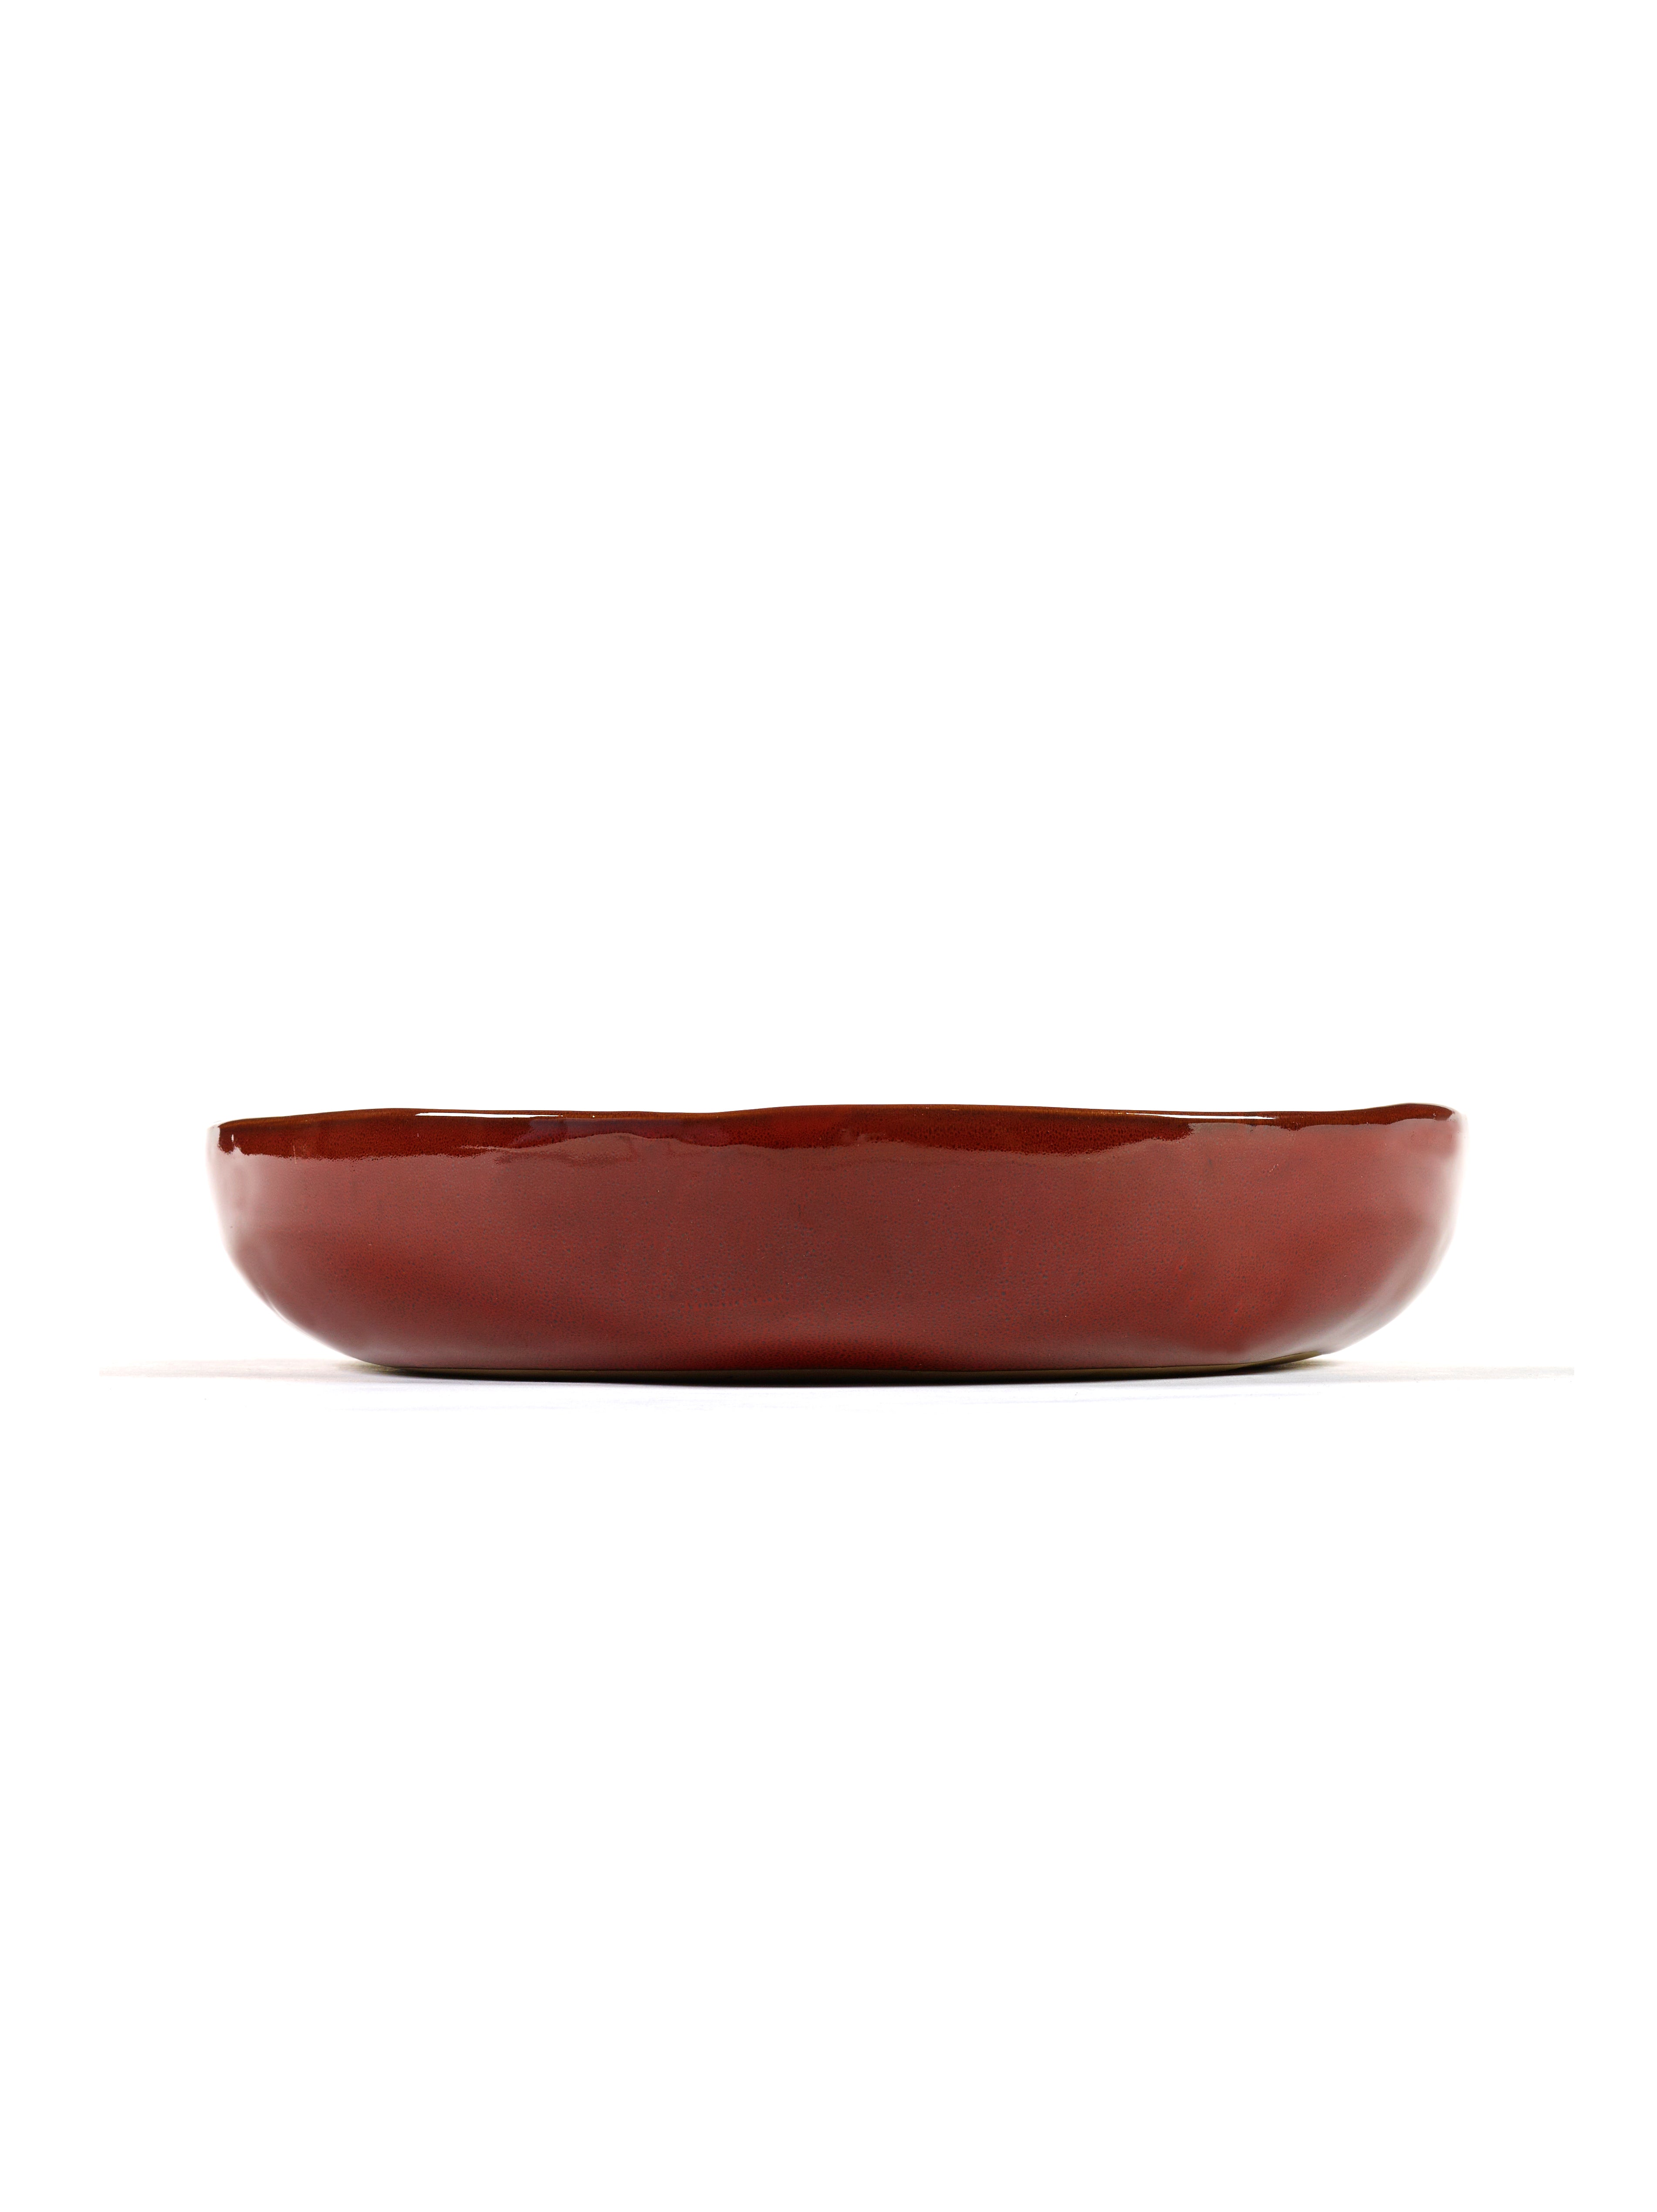 Serving bowl M - La Mère by Marie Michielssen - Venetian red